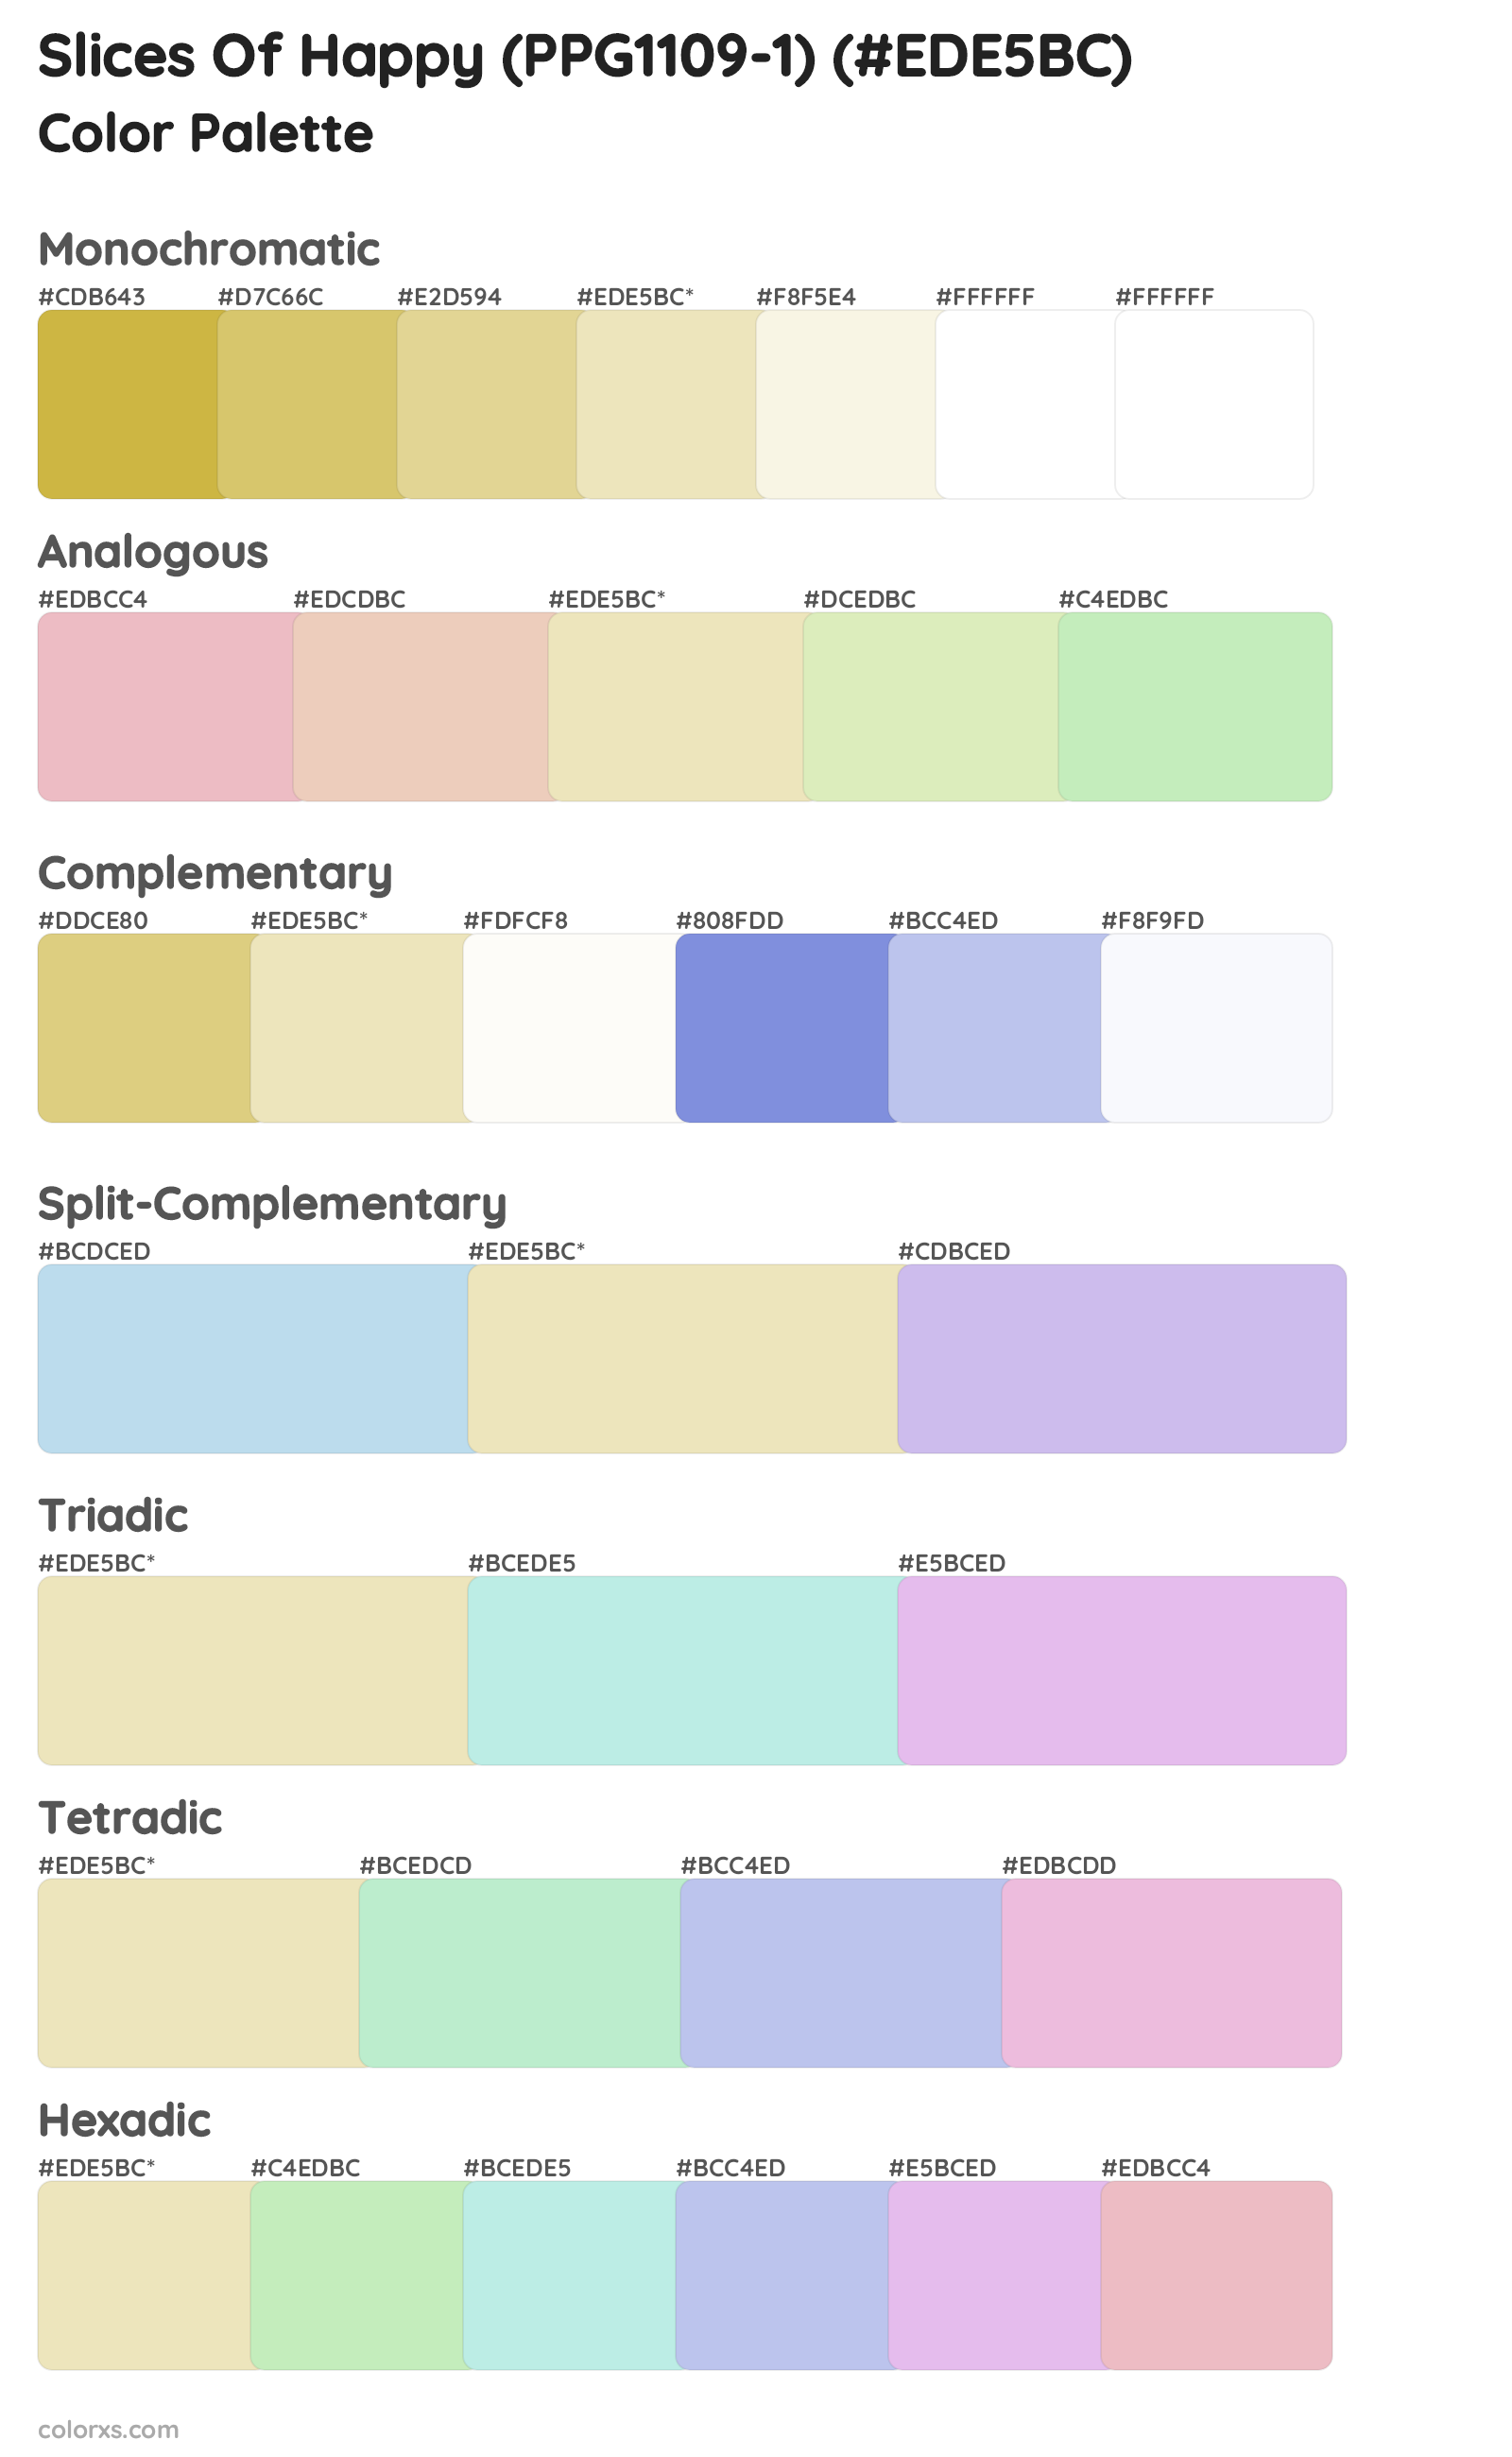 Slices Of Happy (PPG1109-1) Color Scheme Palettes